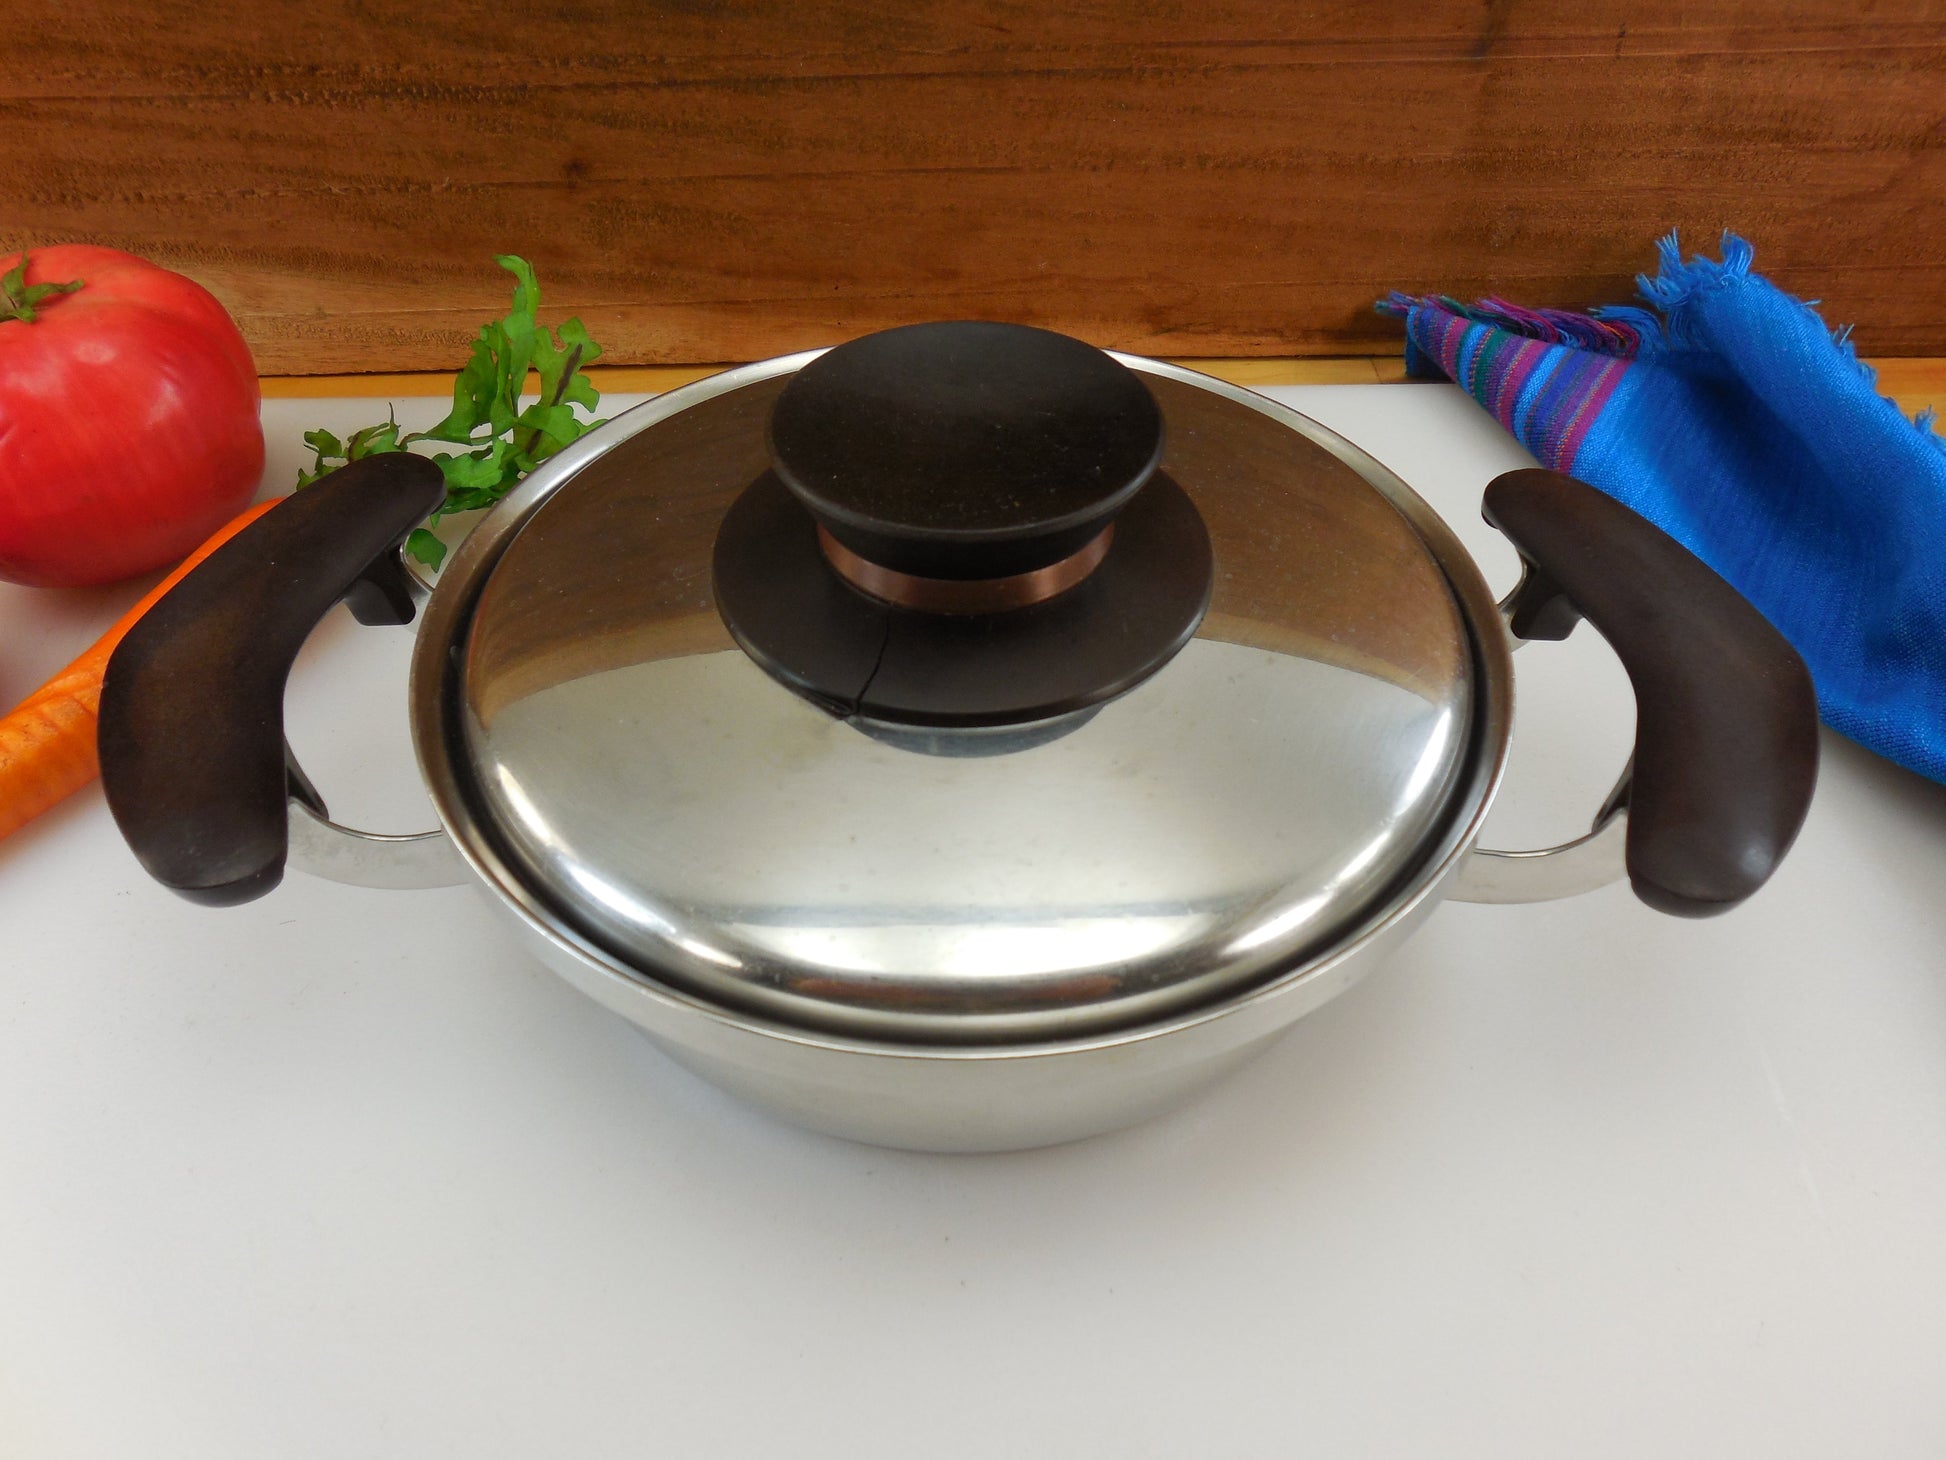 Vintage Society Multi-Plex 1 Quart Sauce Pot Pans Stainless Steel With Lids  USA